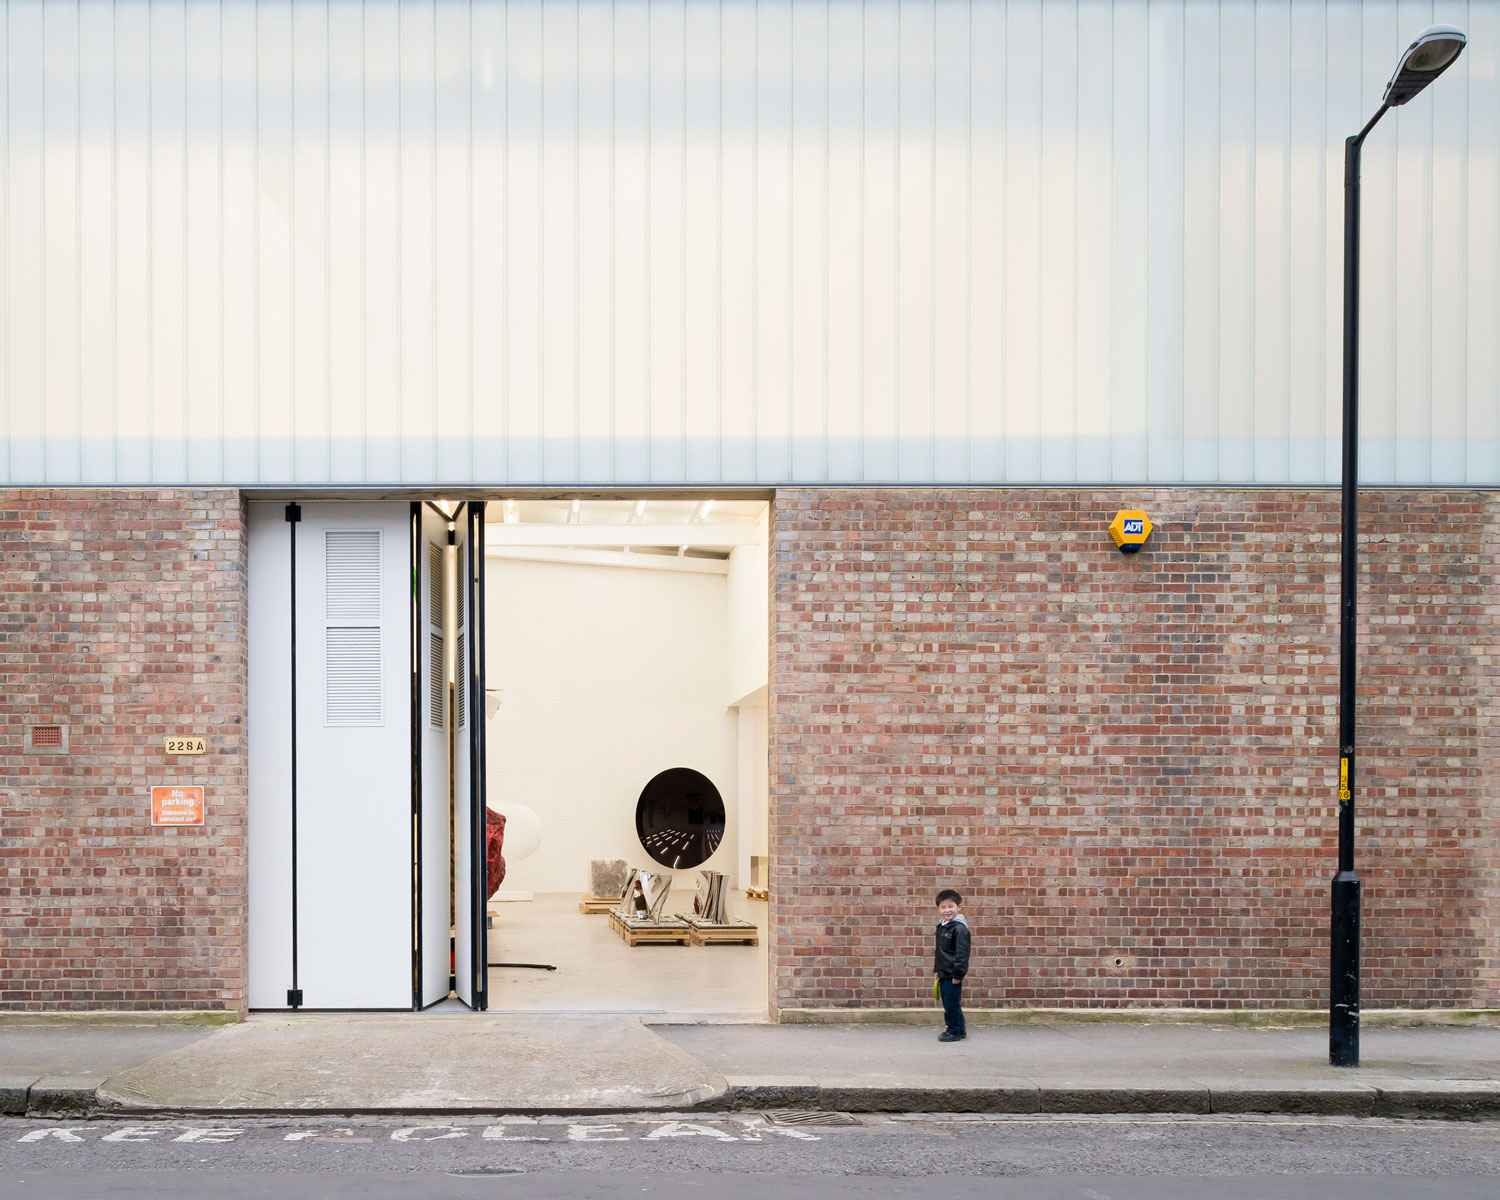 Anish-Kapoor-London-Studios-by-Caseyfierro-Architects-Yellowtrace-01.jpg